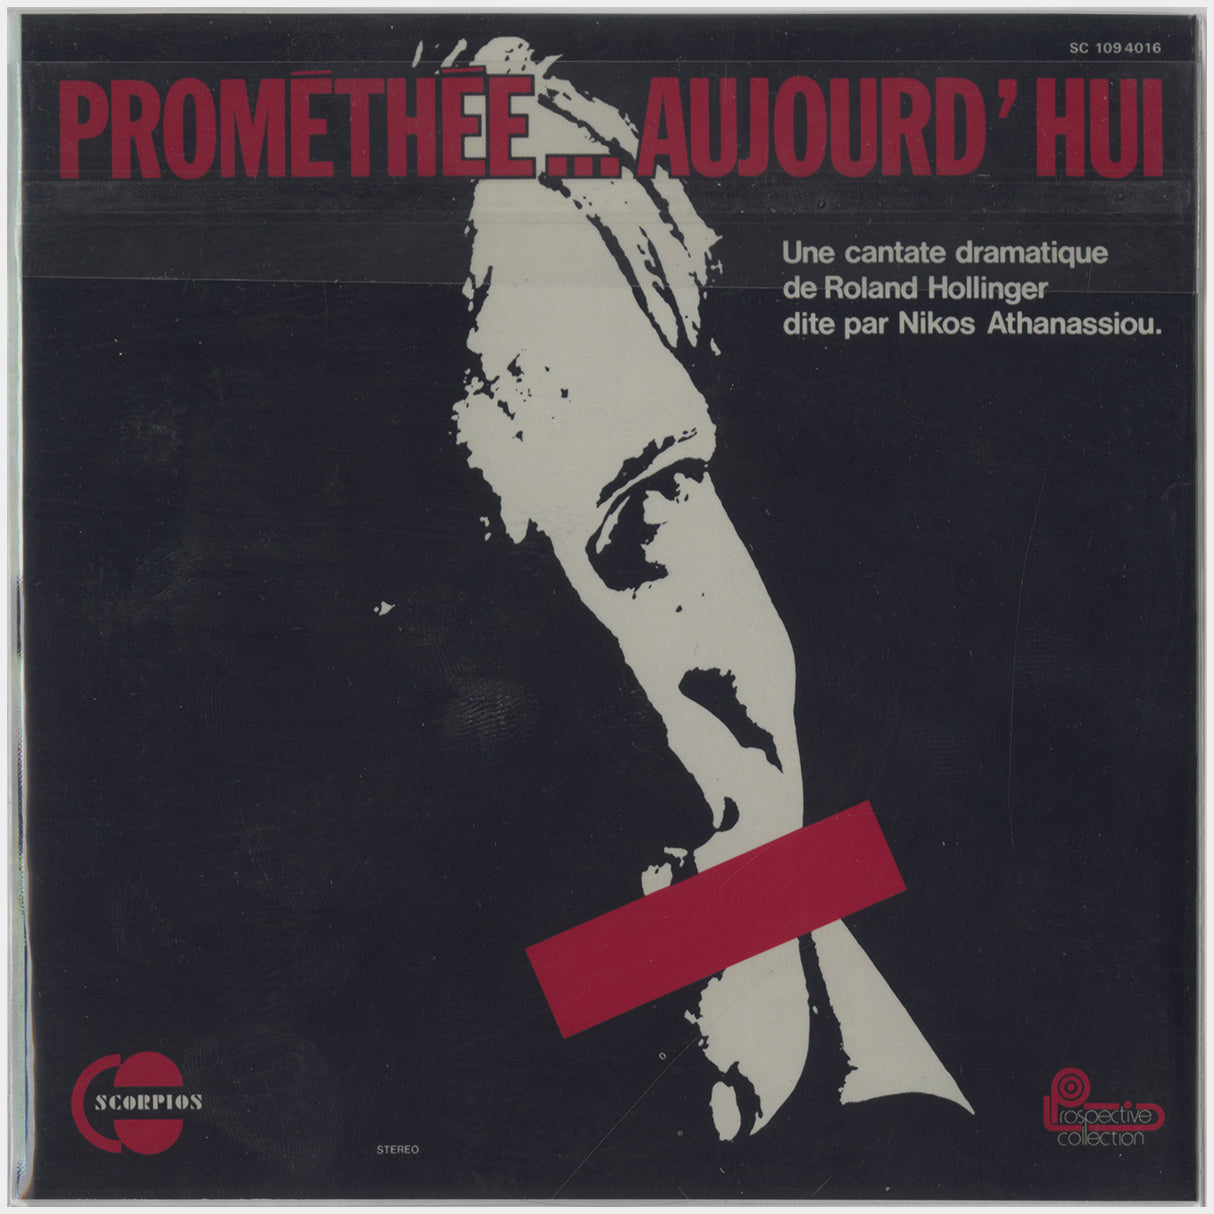 [CP 280 CD] Roland Hollinger; Bardo Thodol, Prométhée... Aujourd'Hui